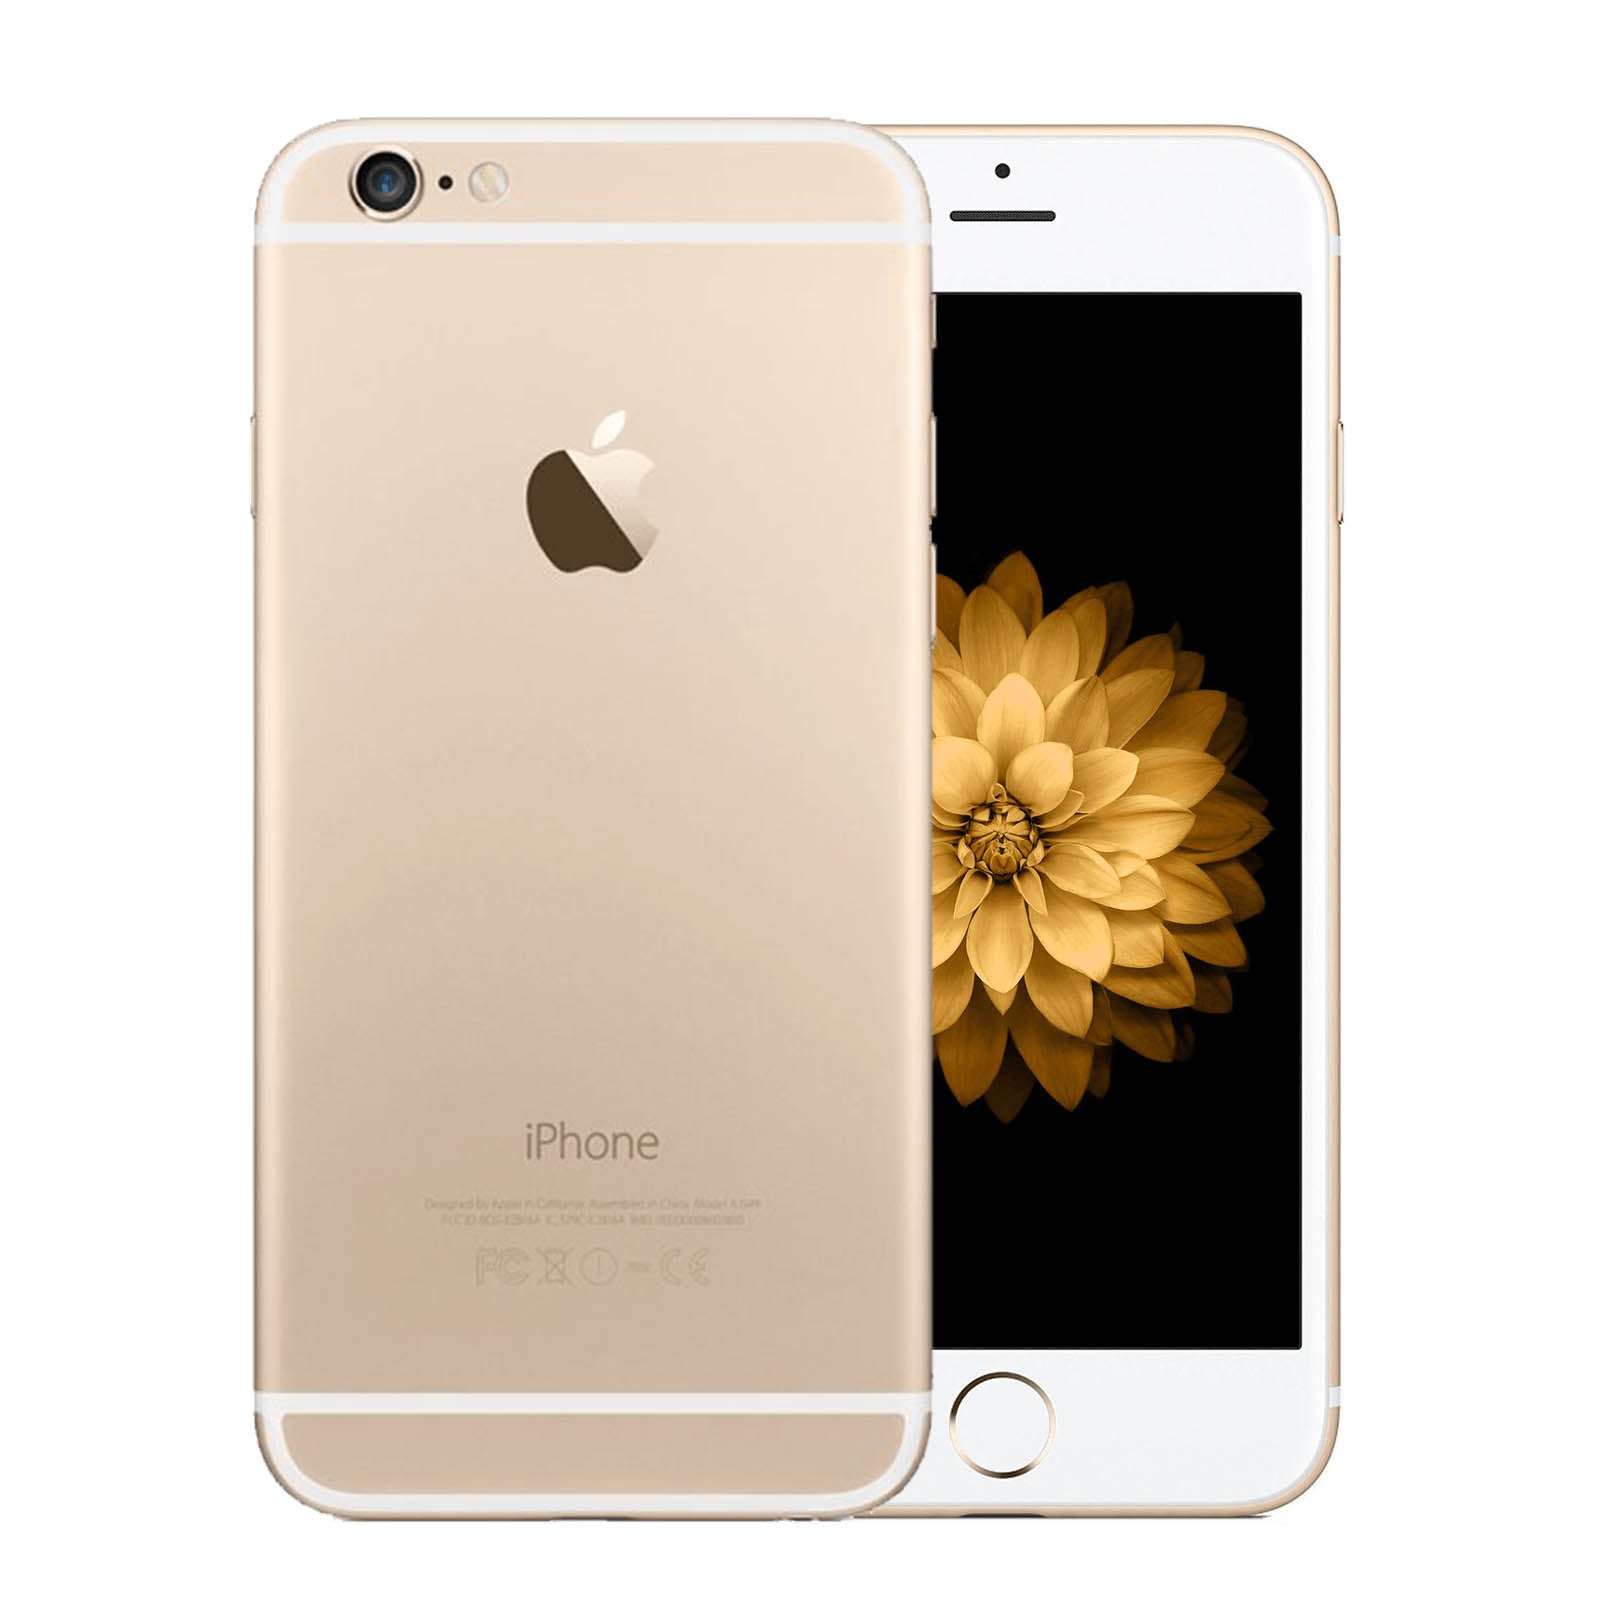 Apple iPhone 6 128GB Gold Good - Unlocked